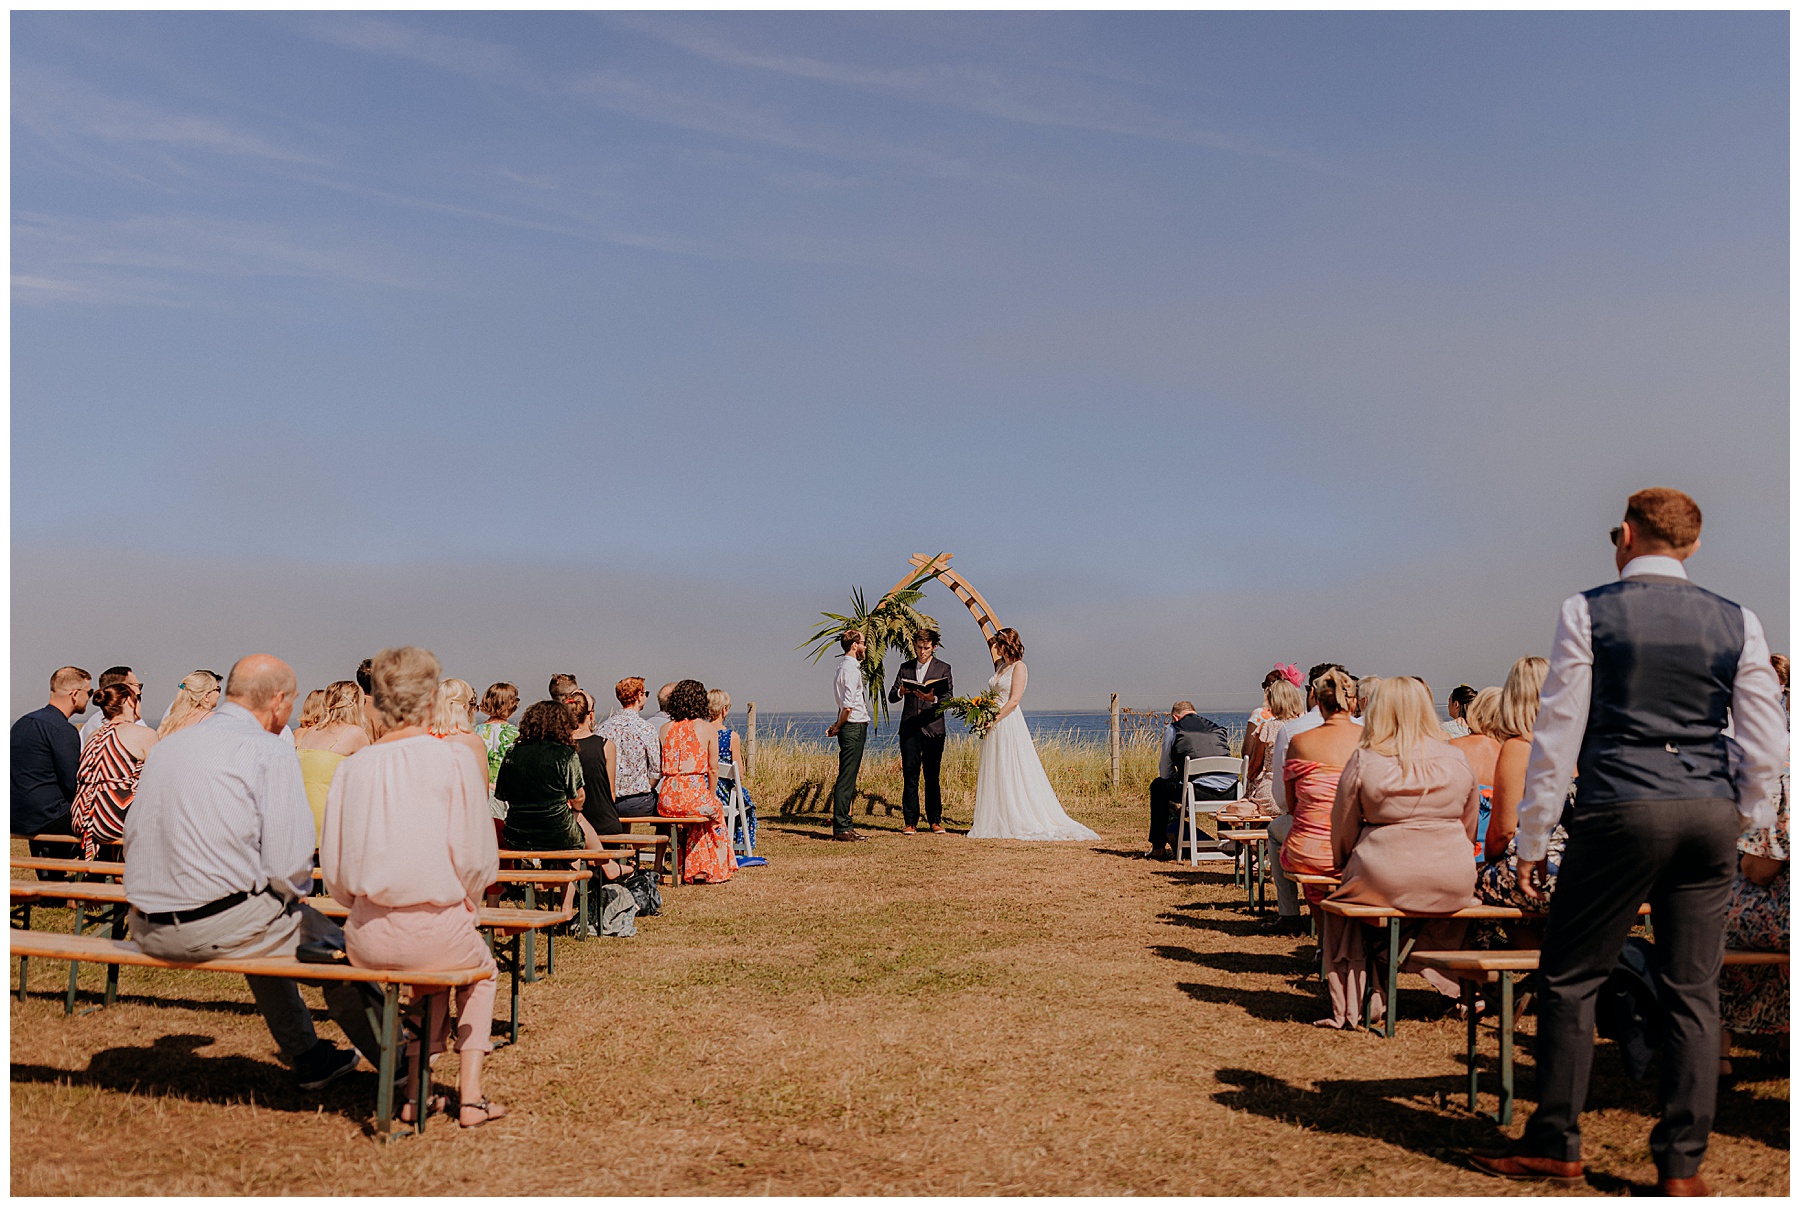 Creative Wedding Photography - Beach Wedding Photography